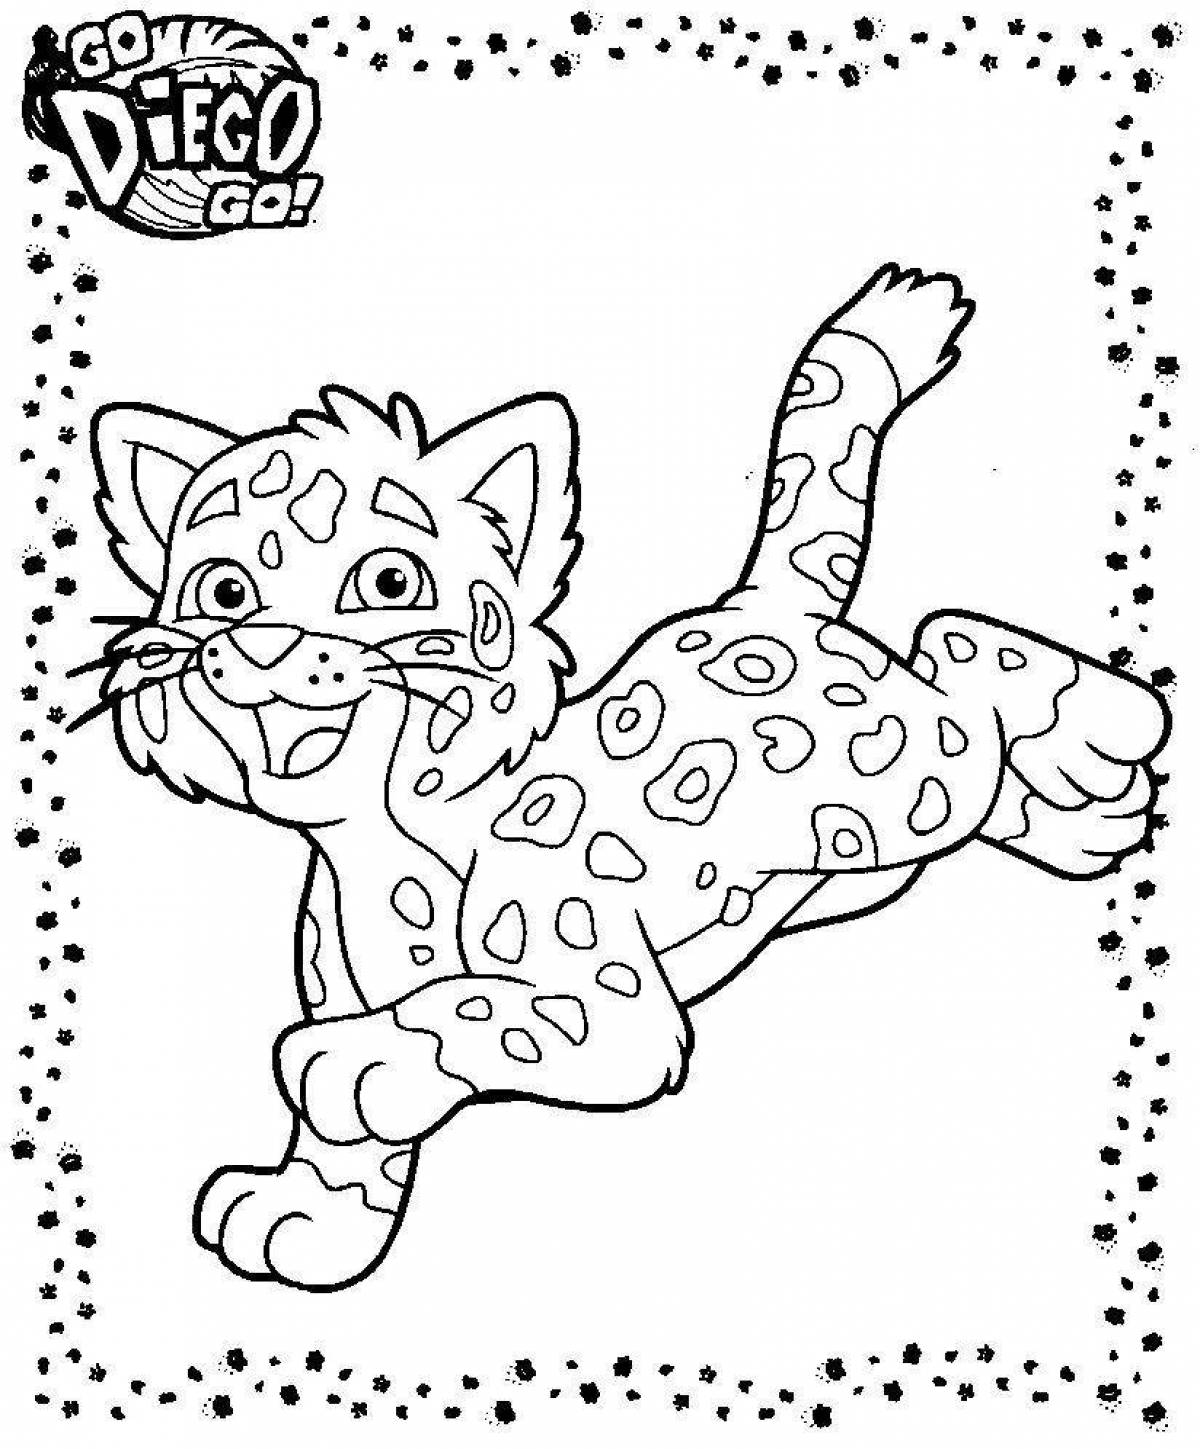 Outstanding jaguar coloring book for kids